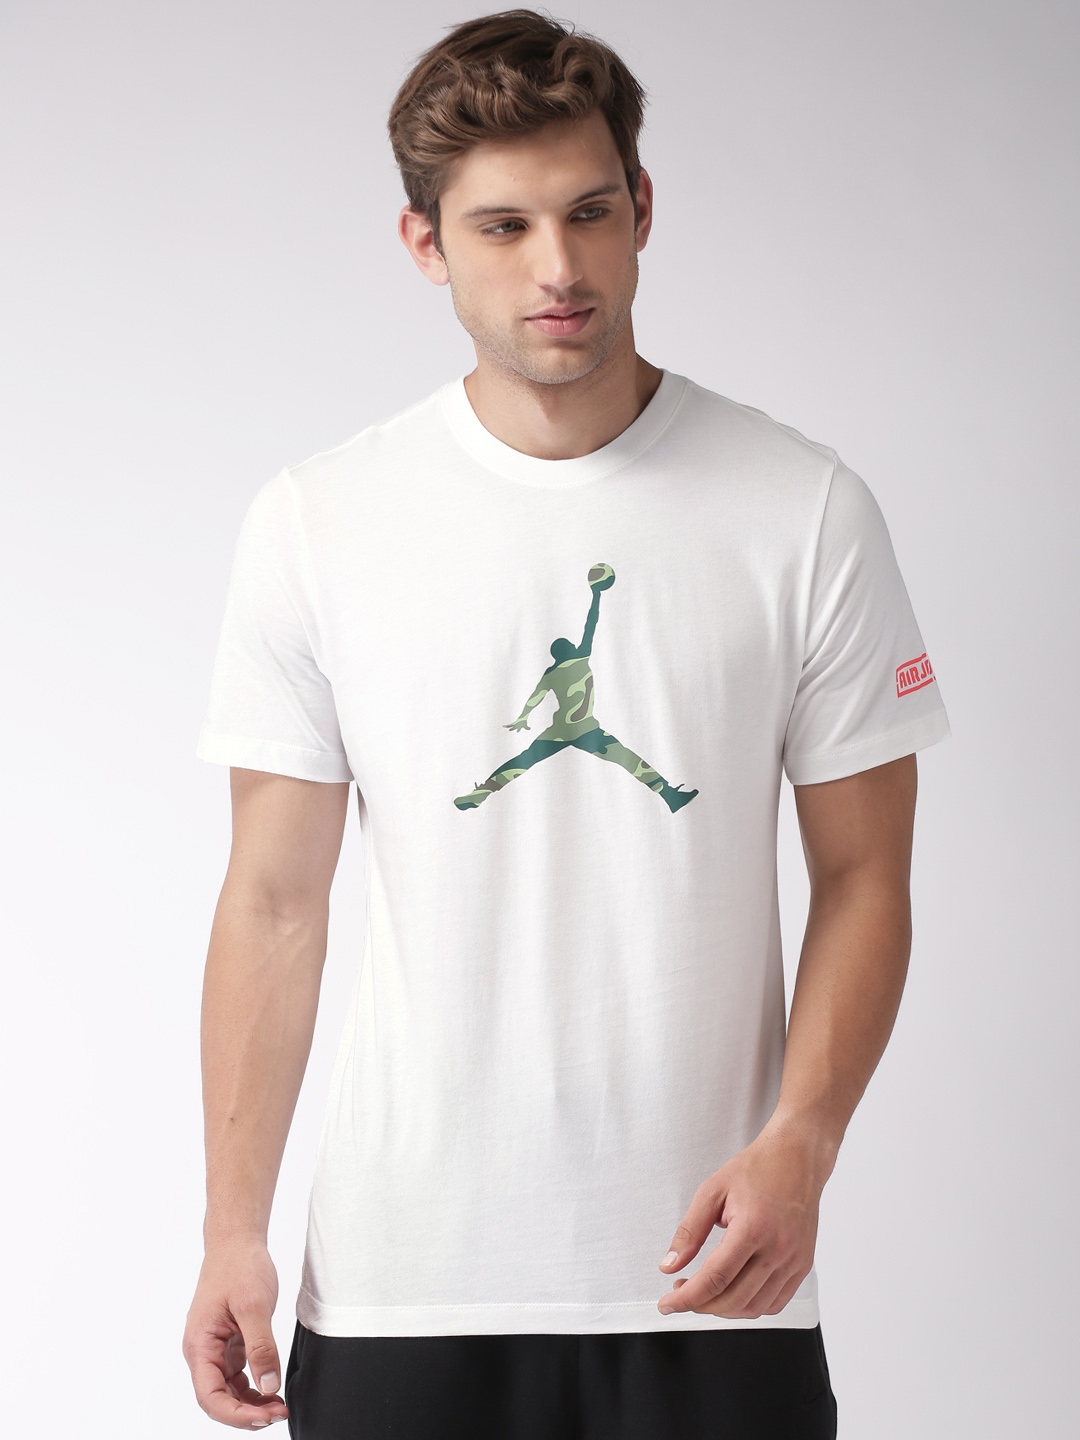 air jordan t shirts for sale